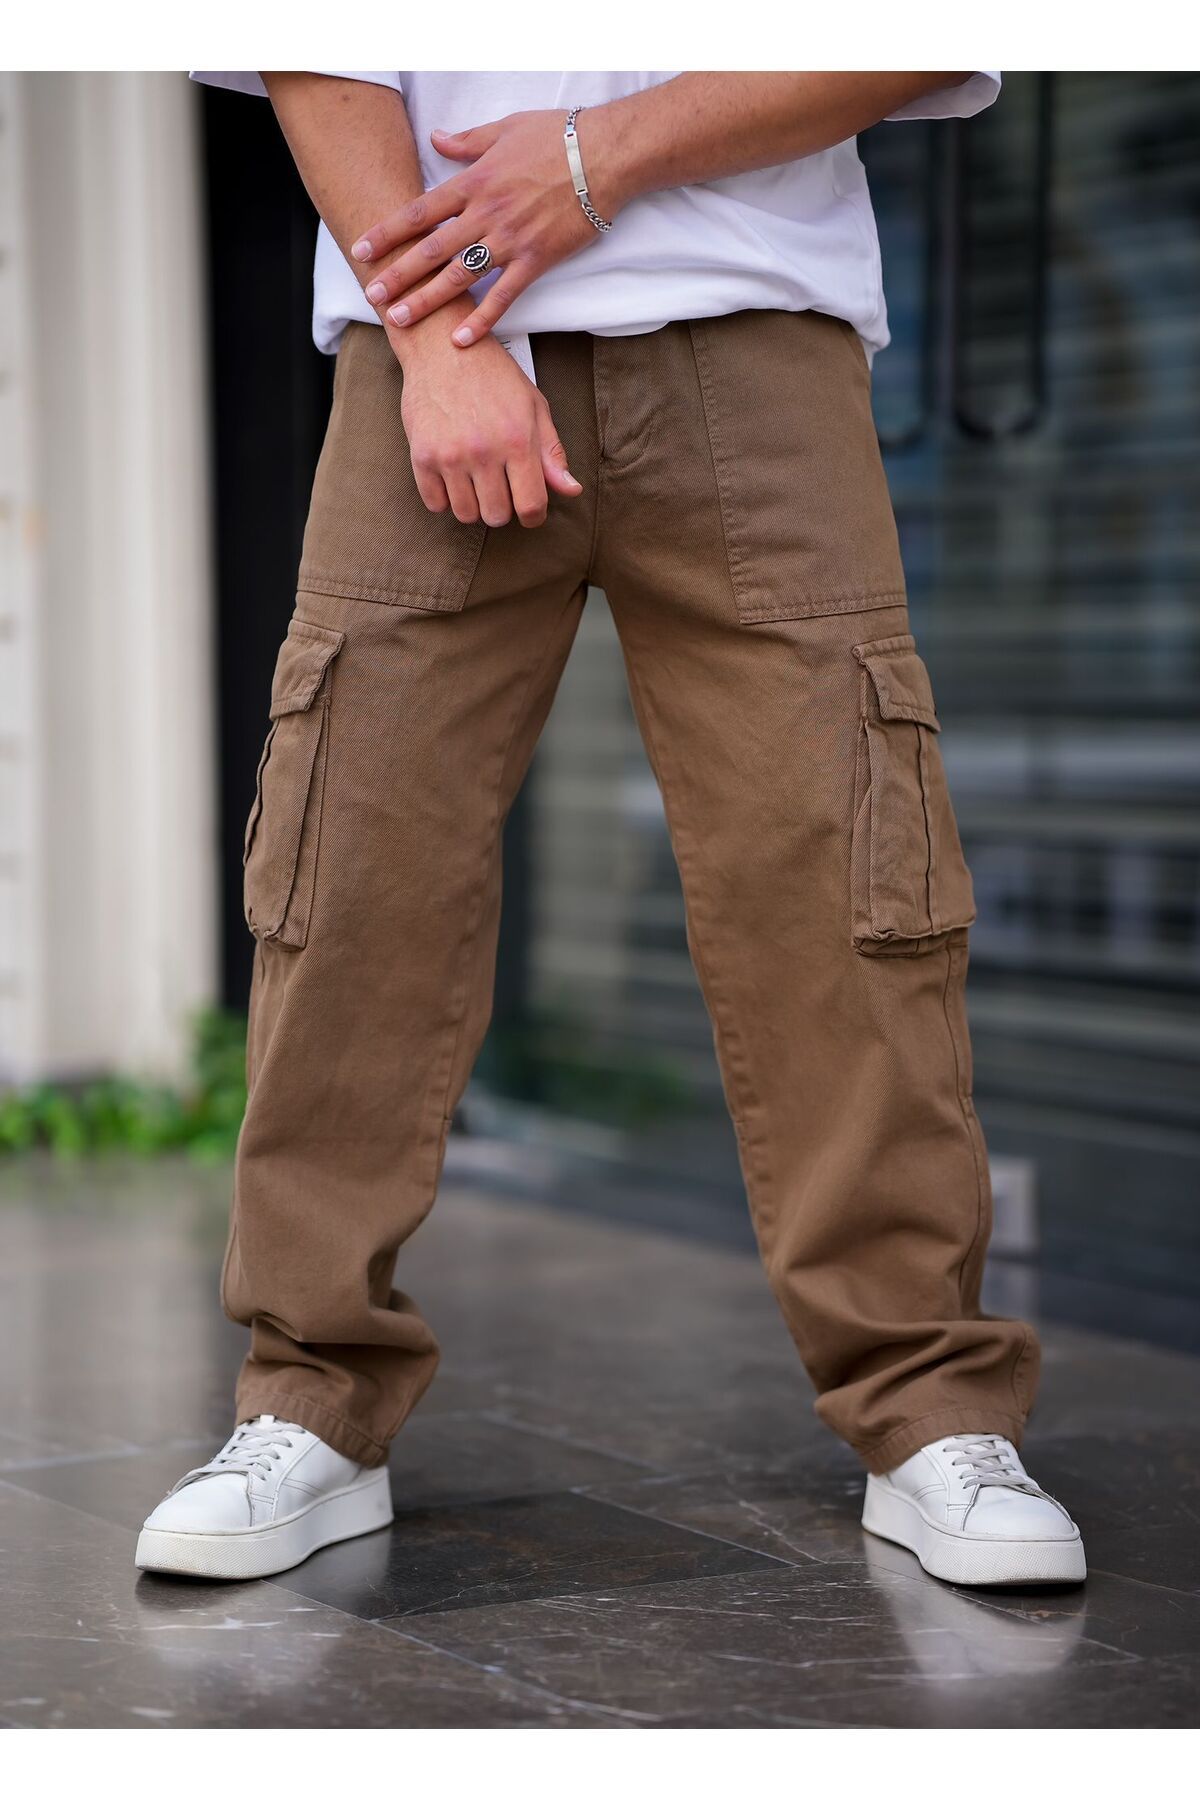 COOL TARZ Men's Cargo Pocket Baggy Pants Brown Color - Trendyol